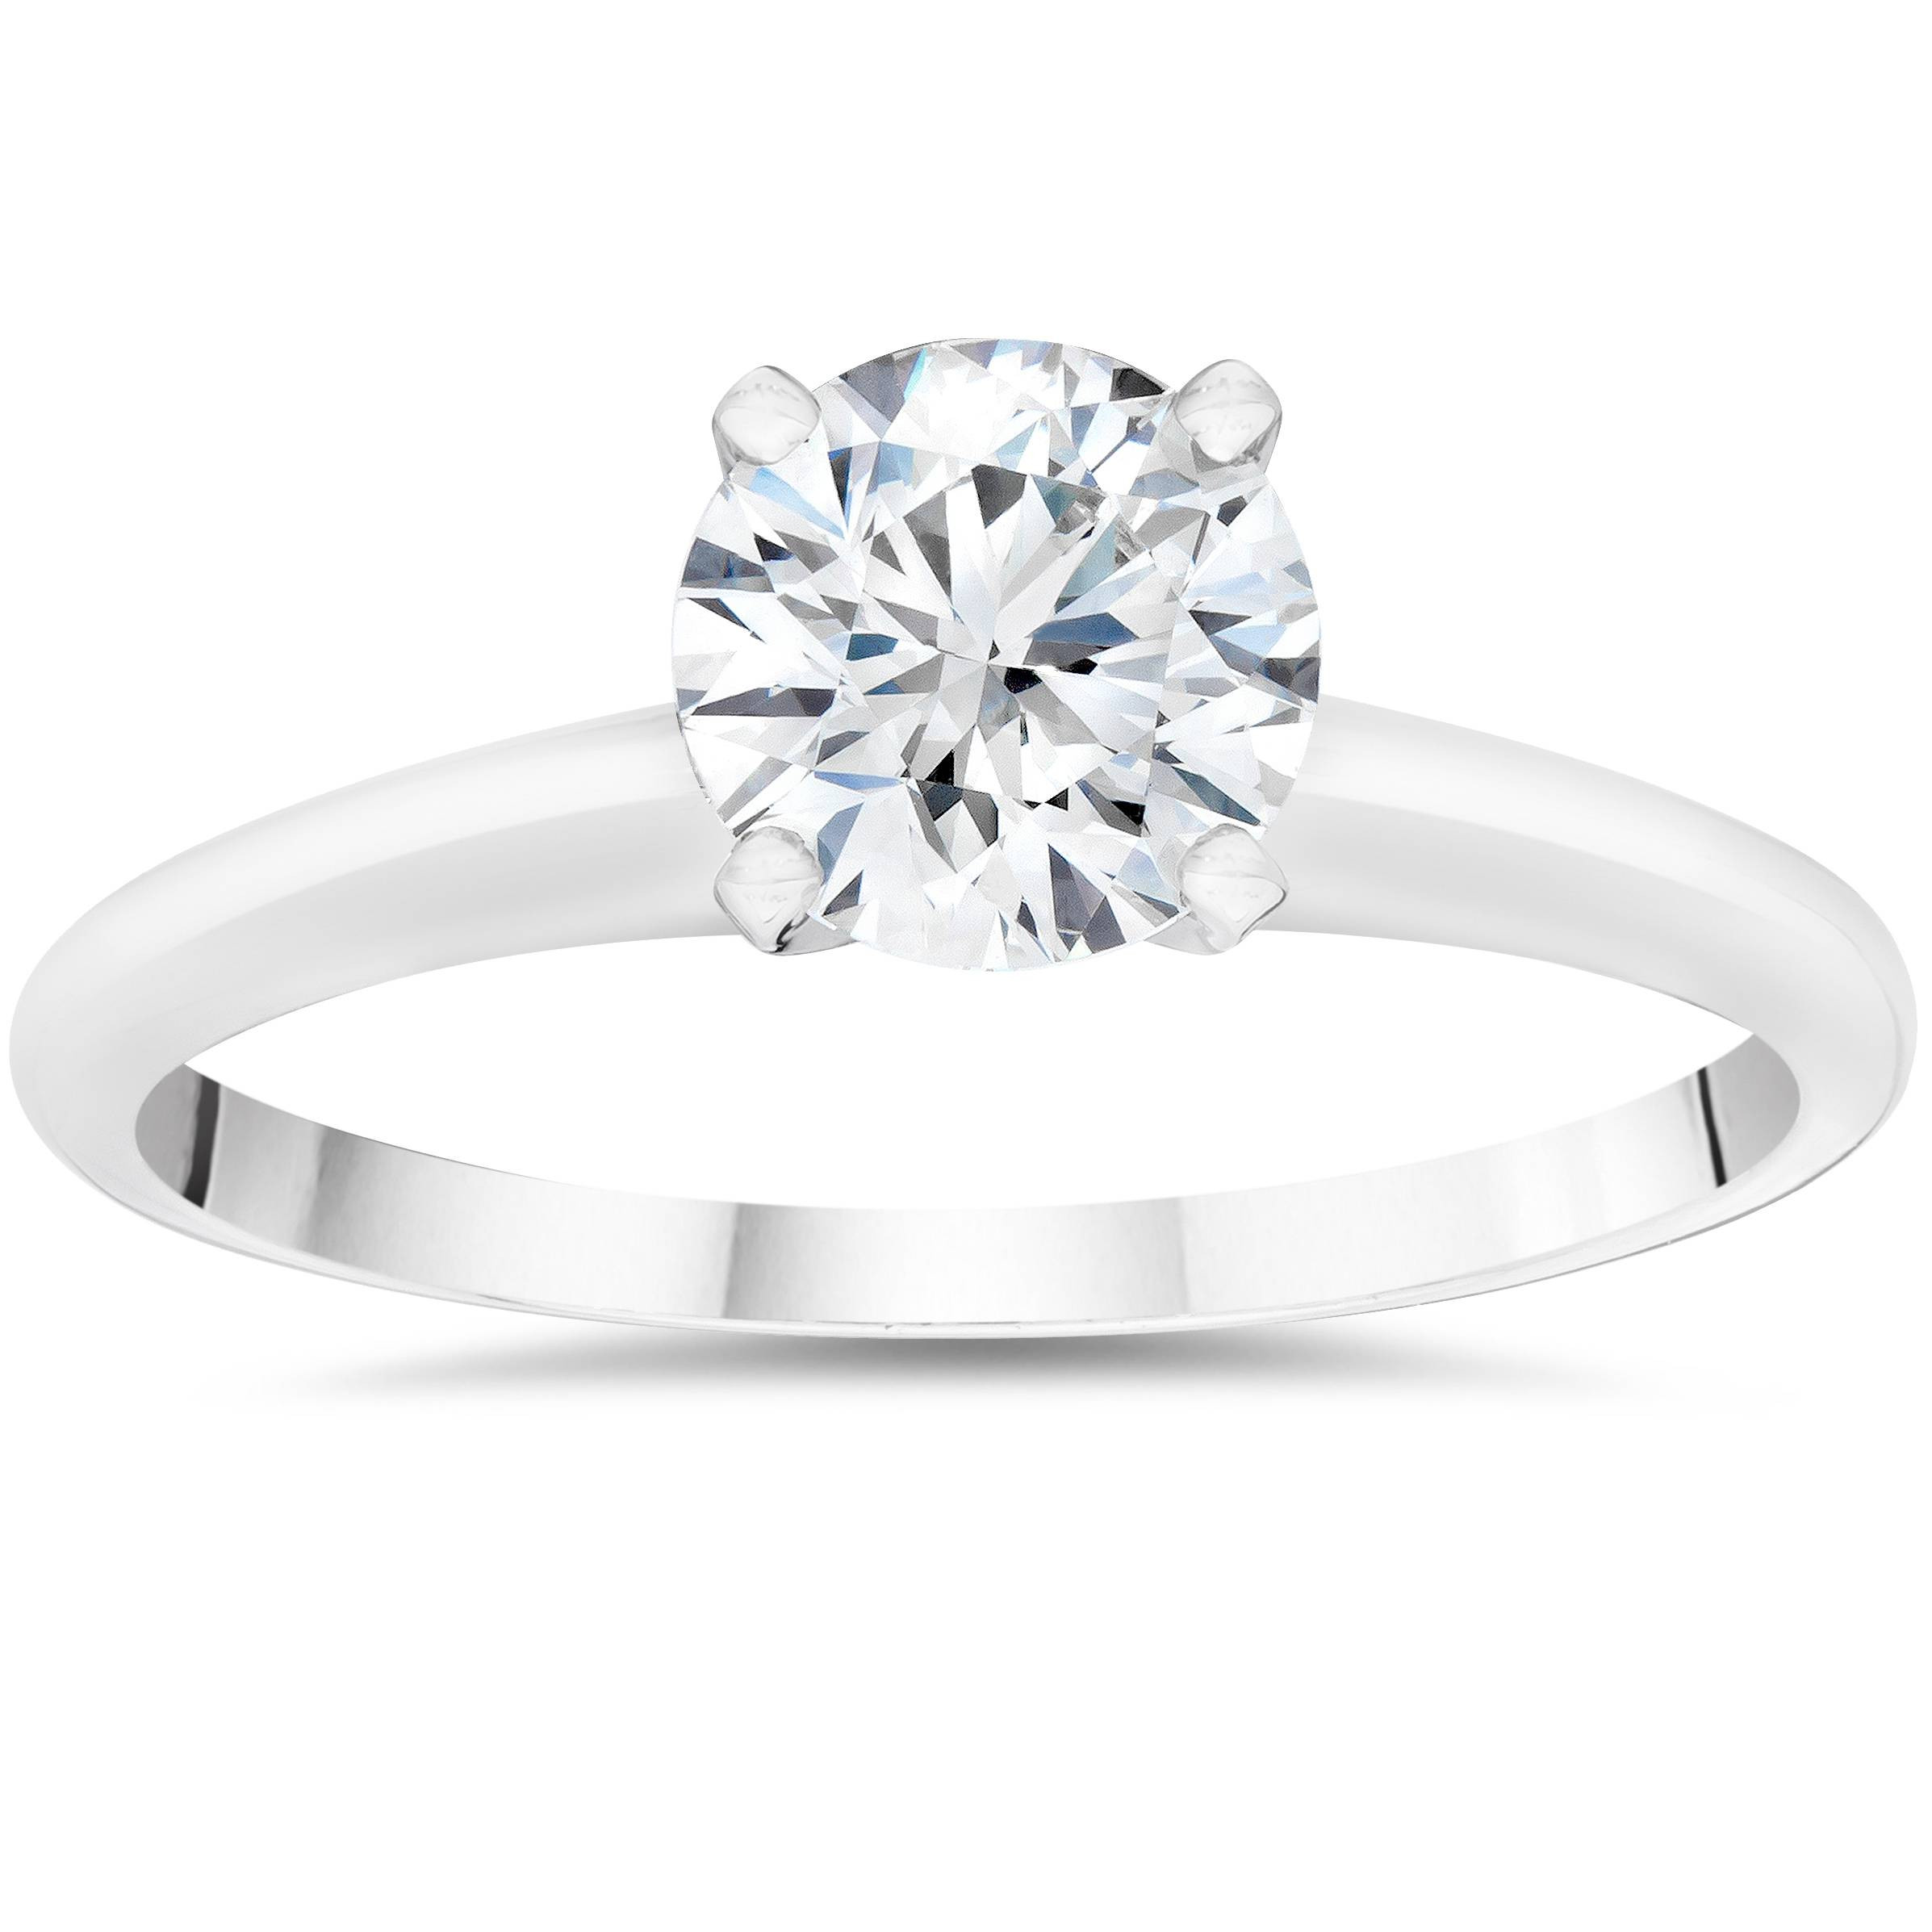 Lab Created Diamond Engagement Rings
 3 4ct Lab Created Round Diamond Solitaire Engagement Ring